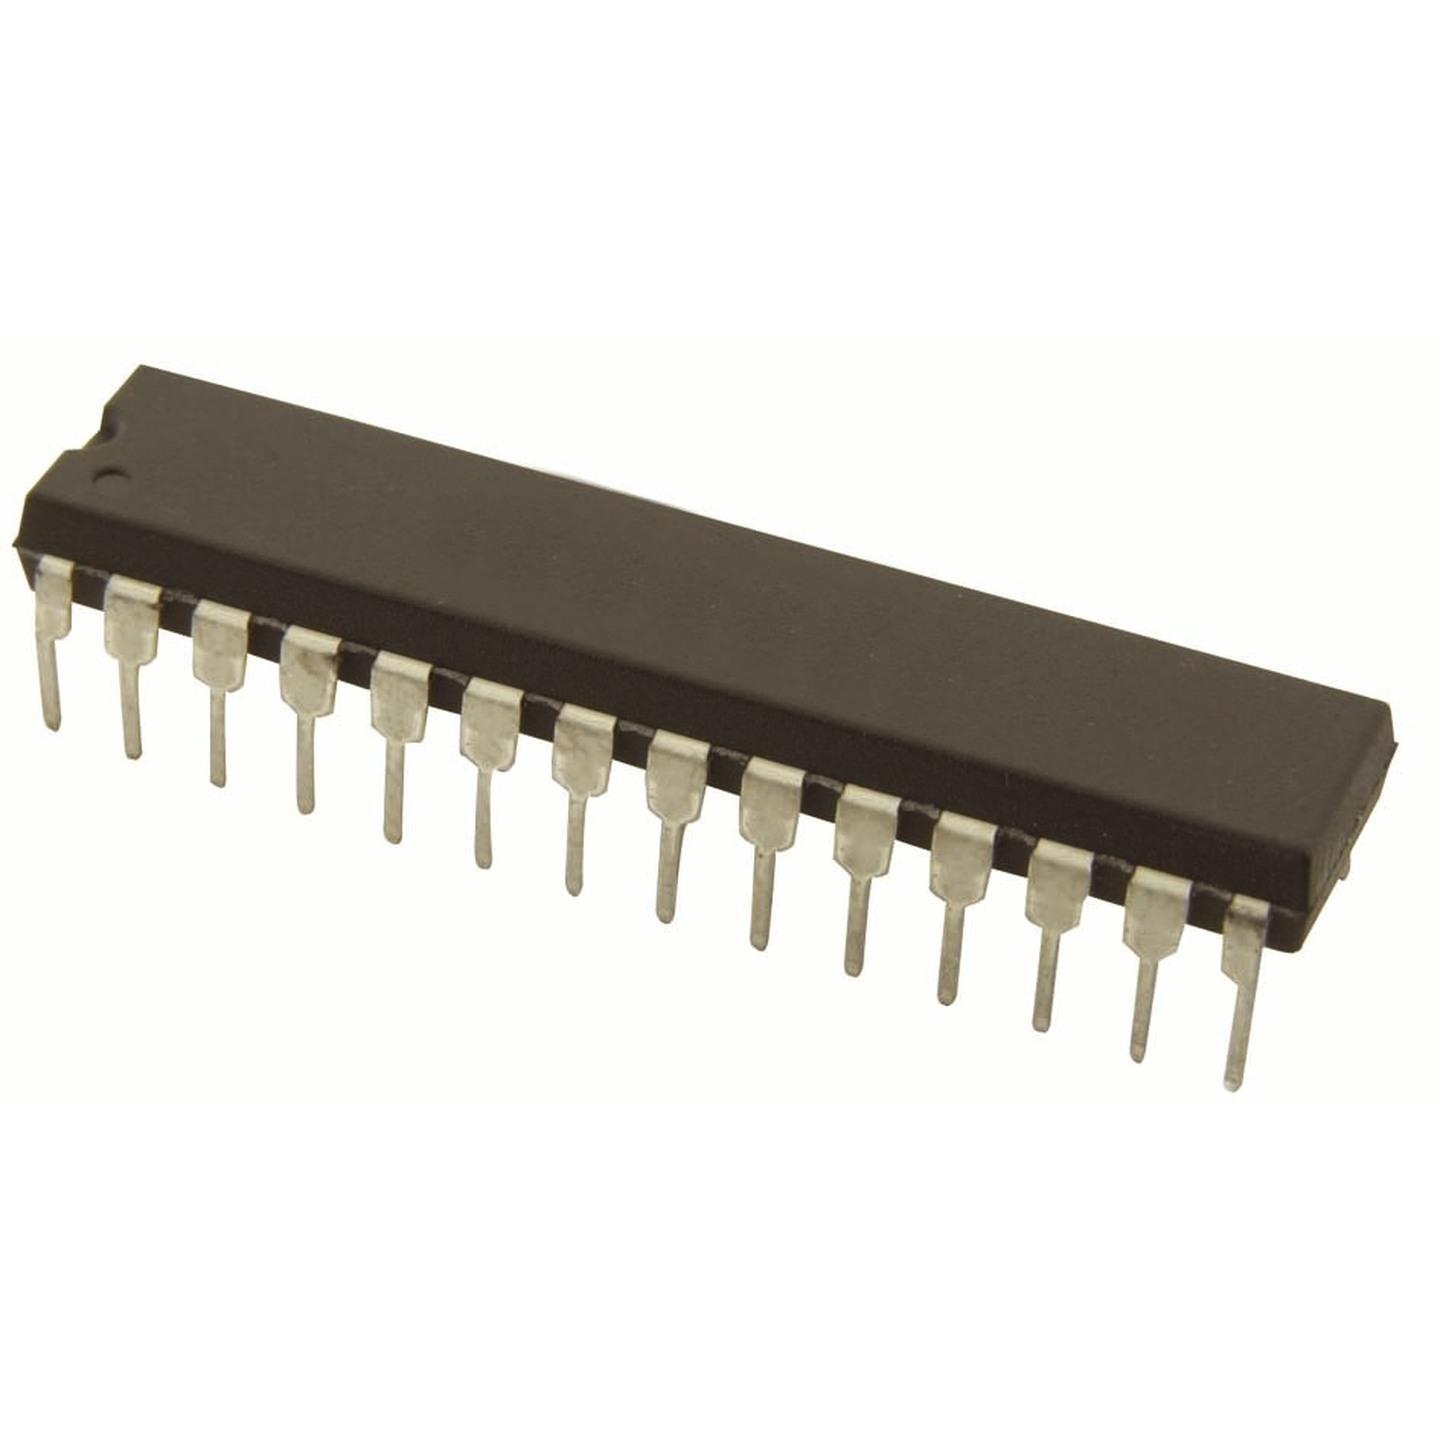 PIC30F2010 Microcontroller